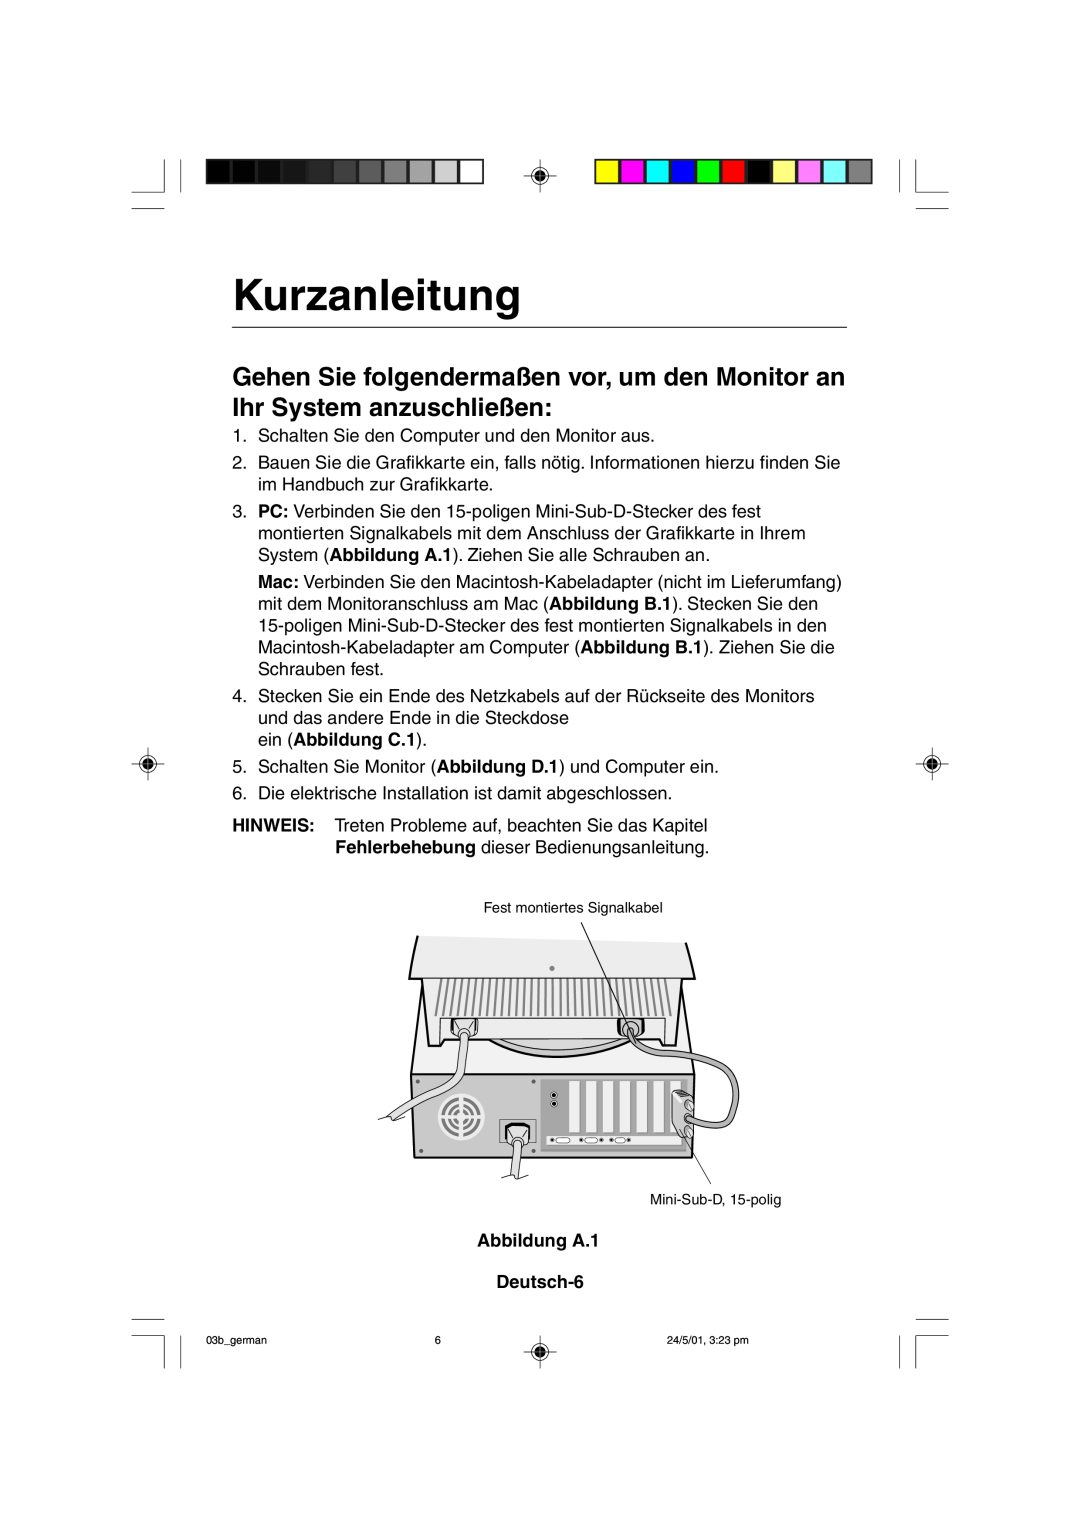 Mitsubishi Electronics M557 user manual Kurzanleitung, ein Abbildung C.1, Abbildung A.1 Deutsch-6 